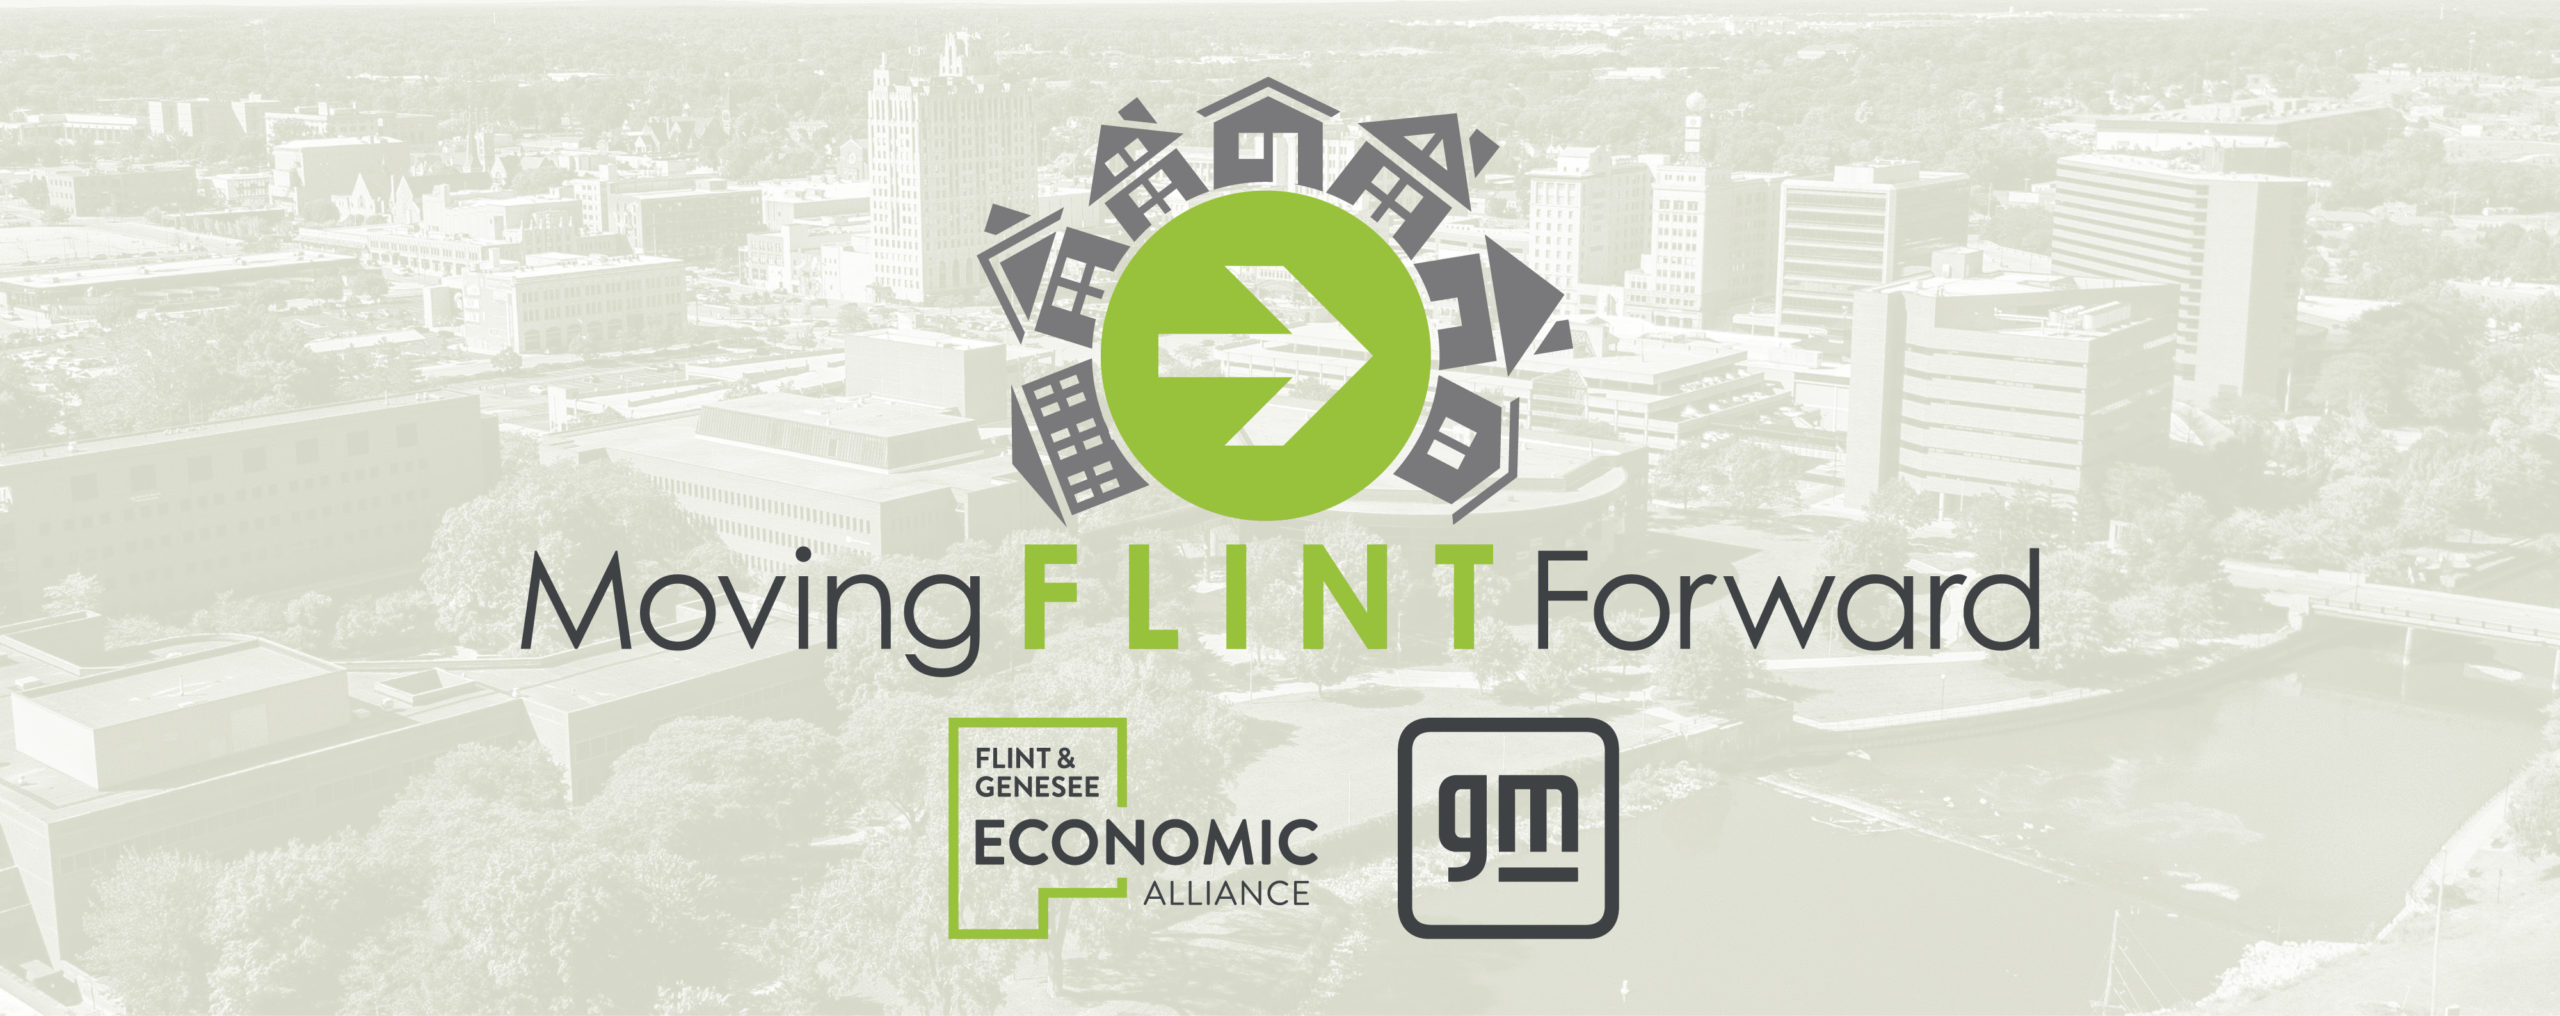 Moving Flint Forward